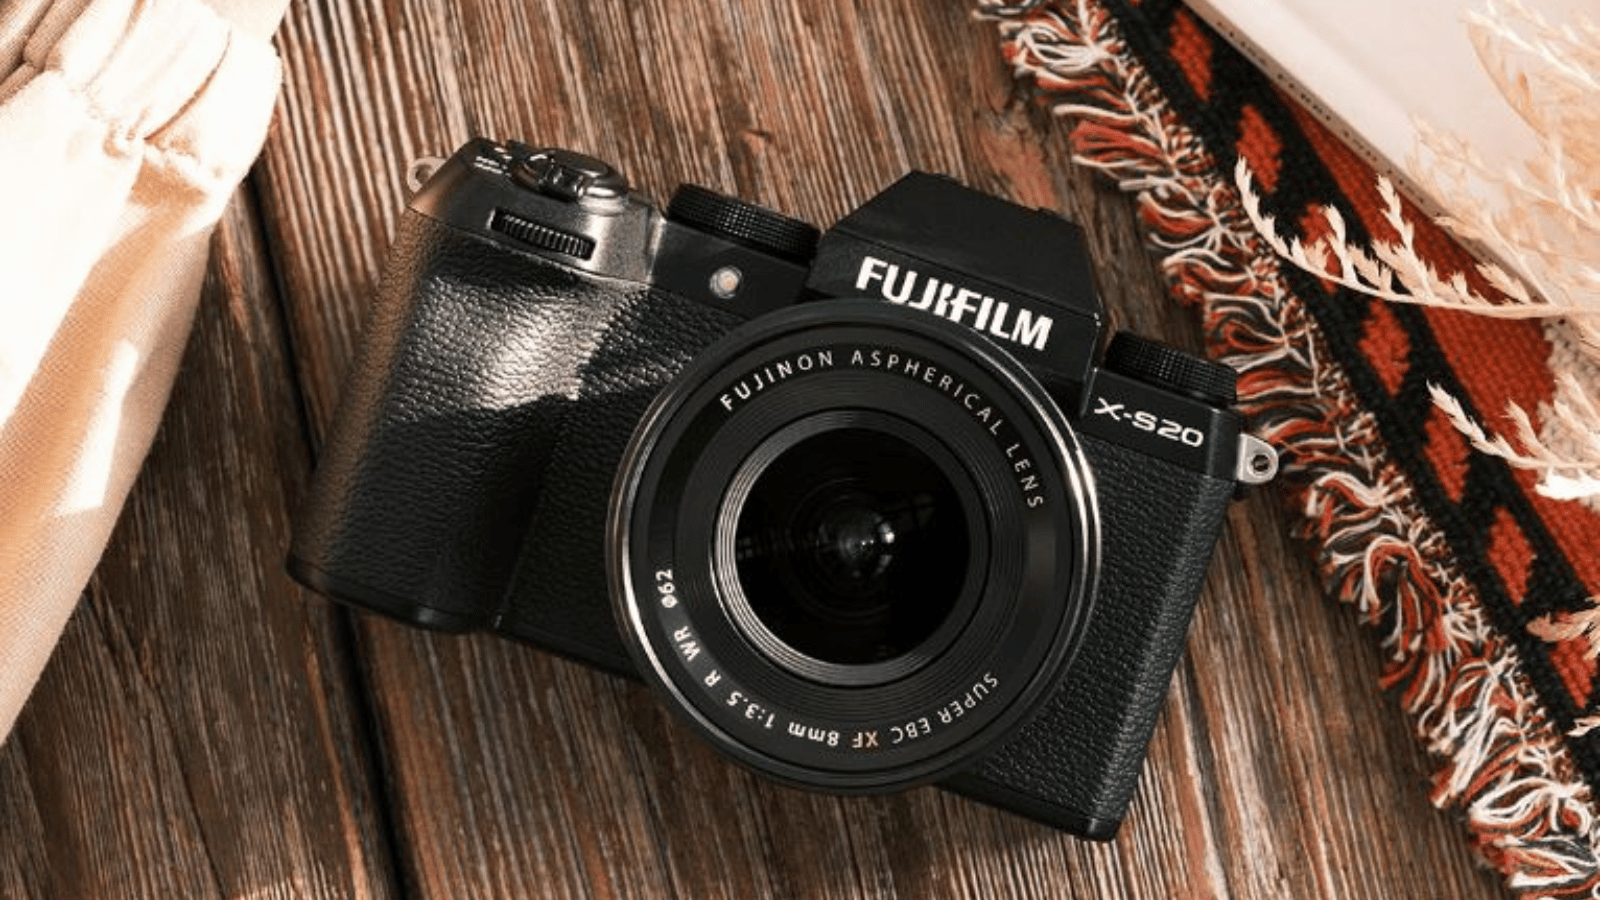 Fujifilm X-S20 mirrorless camera